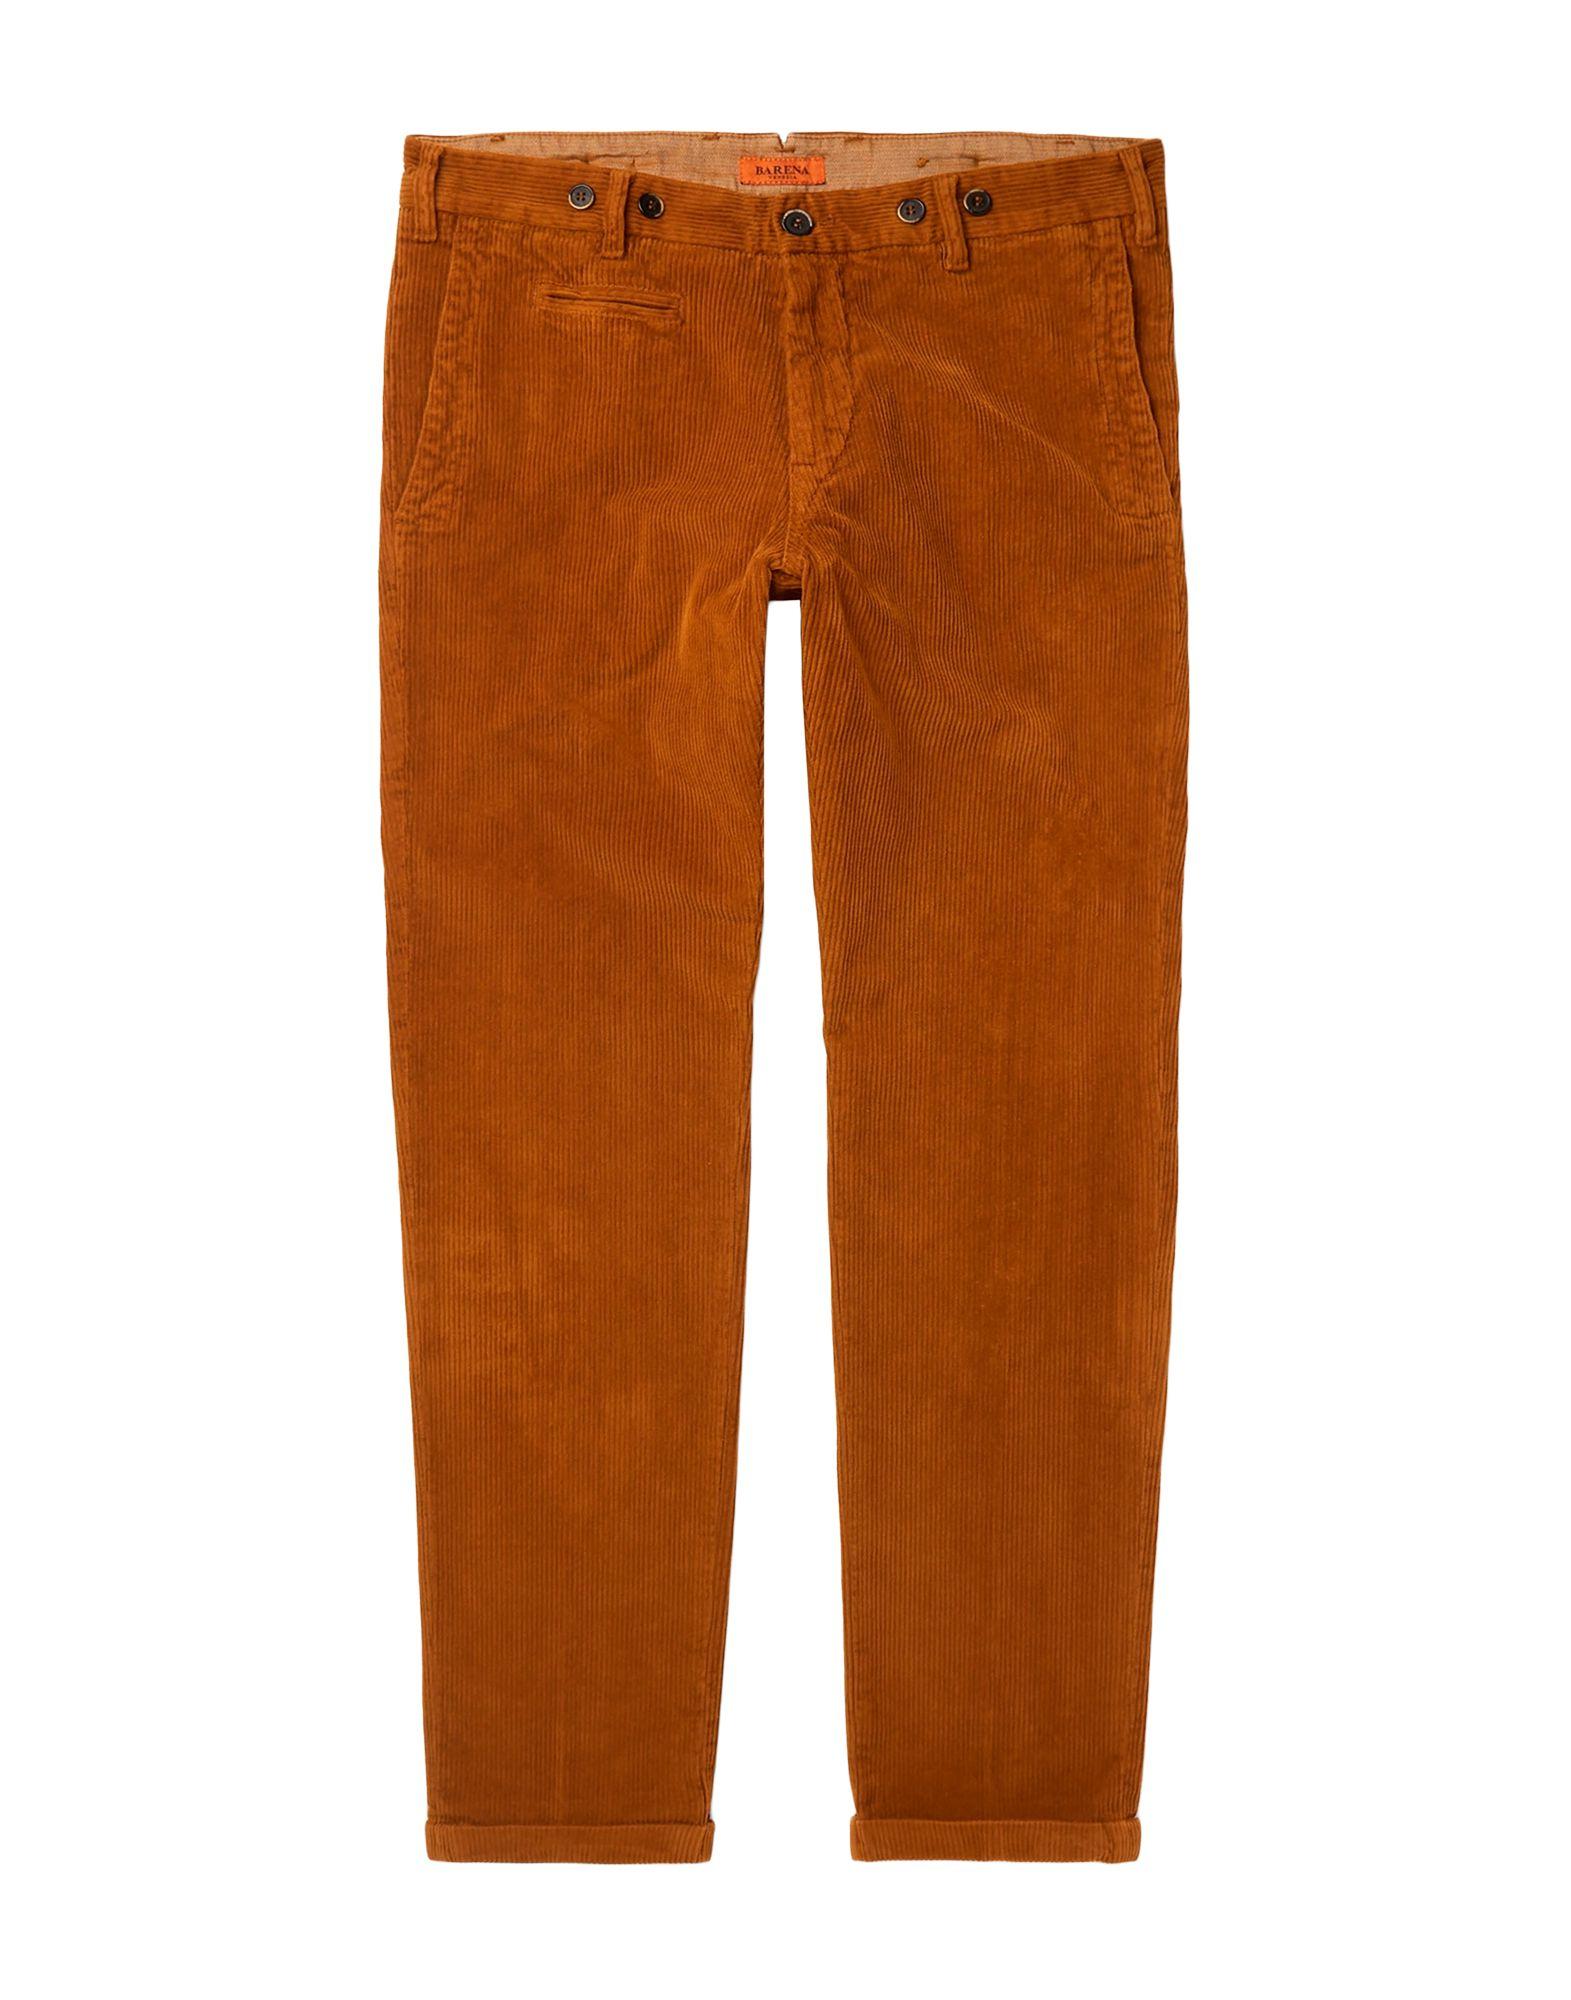 Barena Casual Pants in Brown for Men - Lyst